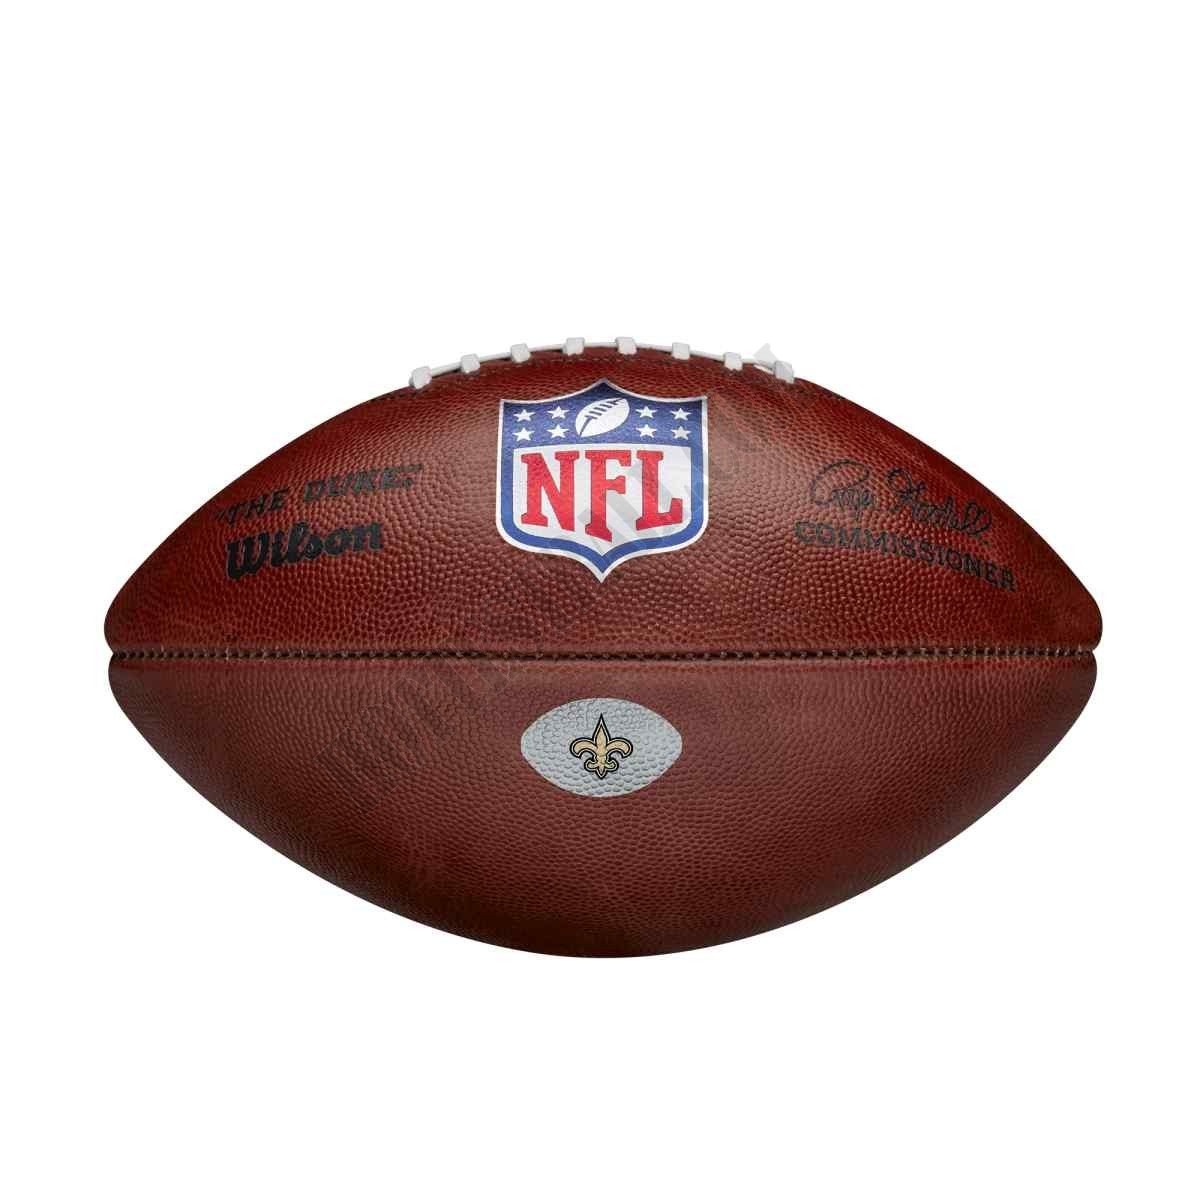 The Duke Decal NFL Football - New Orleans Saints ● Wilson Promotions - The Duke Decal NFL Football - New Orleans Saints ● Wilson Promotions